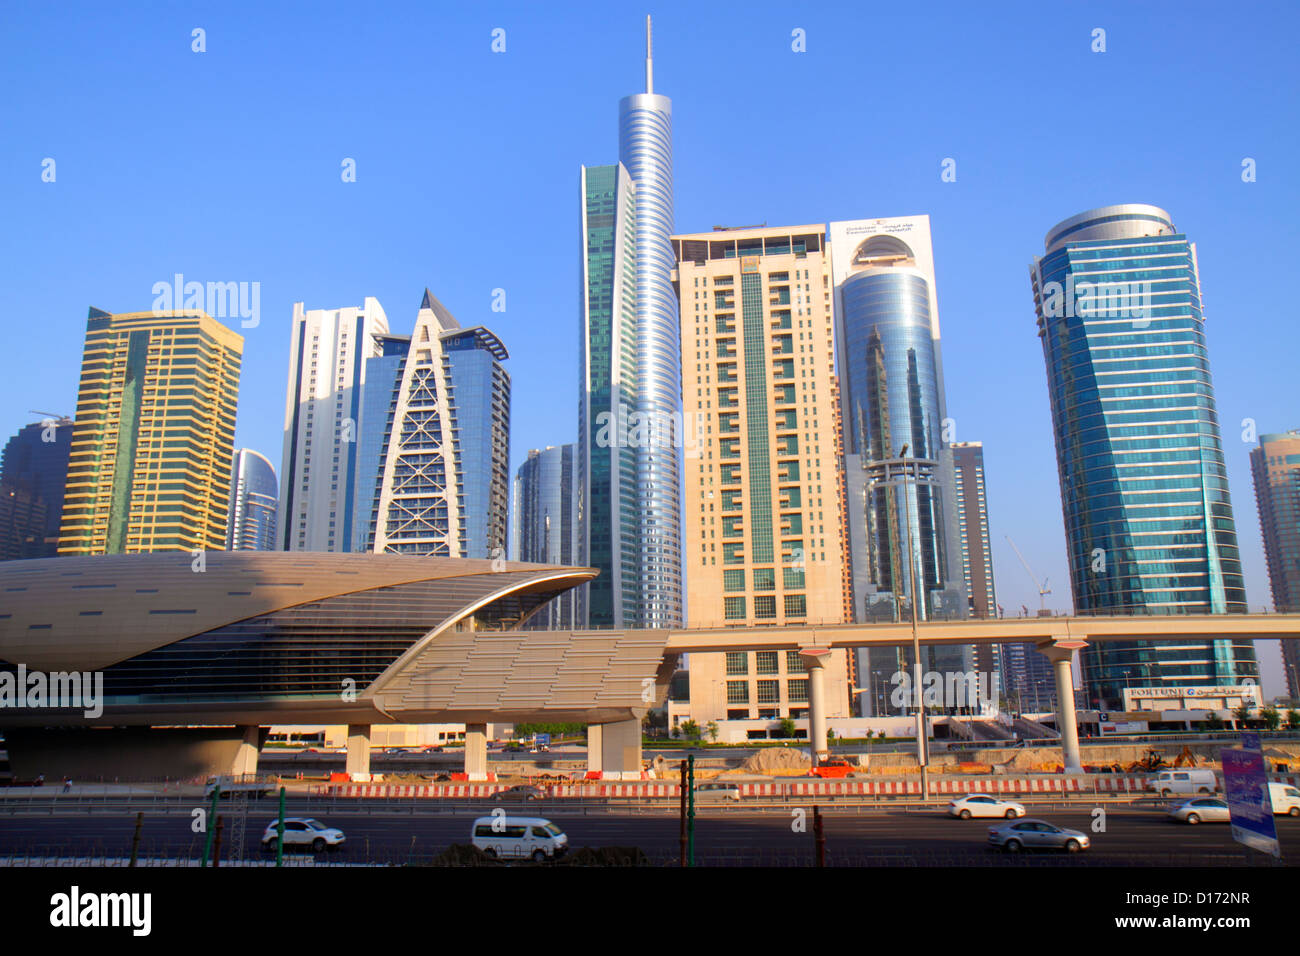 Dubai UAE,United Arab Emirates,Jumeirah Lake Towers Metro Station,subway,train,train,entrance,Fortune Tower,Almas Tower,Indigo,Palladium,building,high Stock Photo